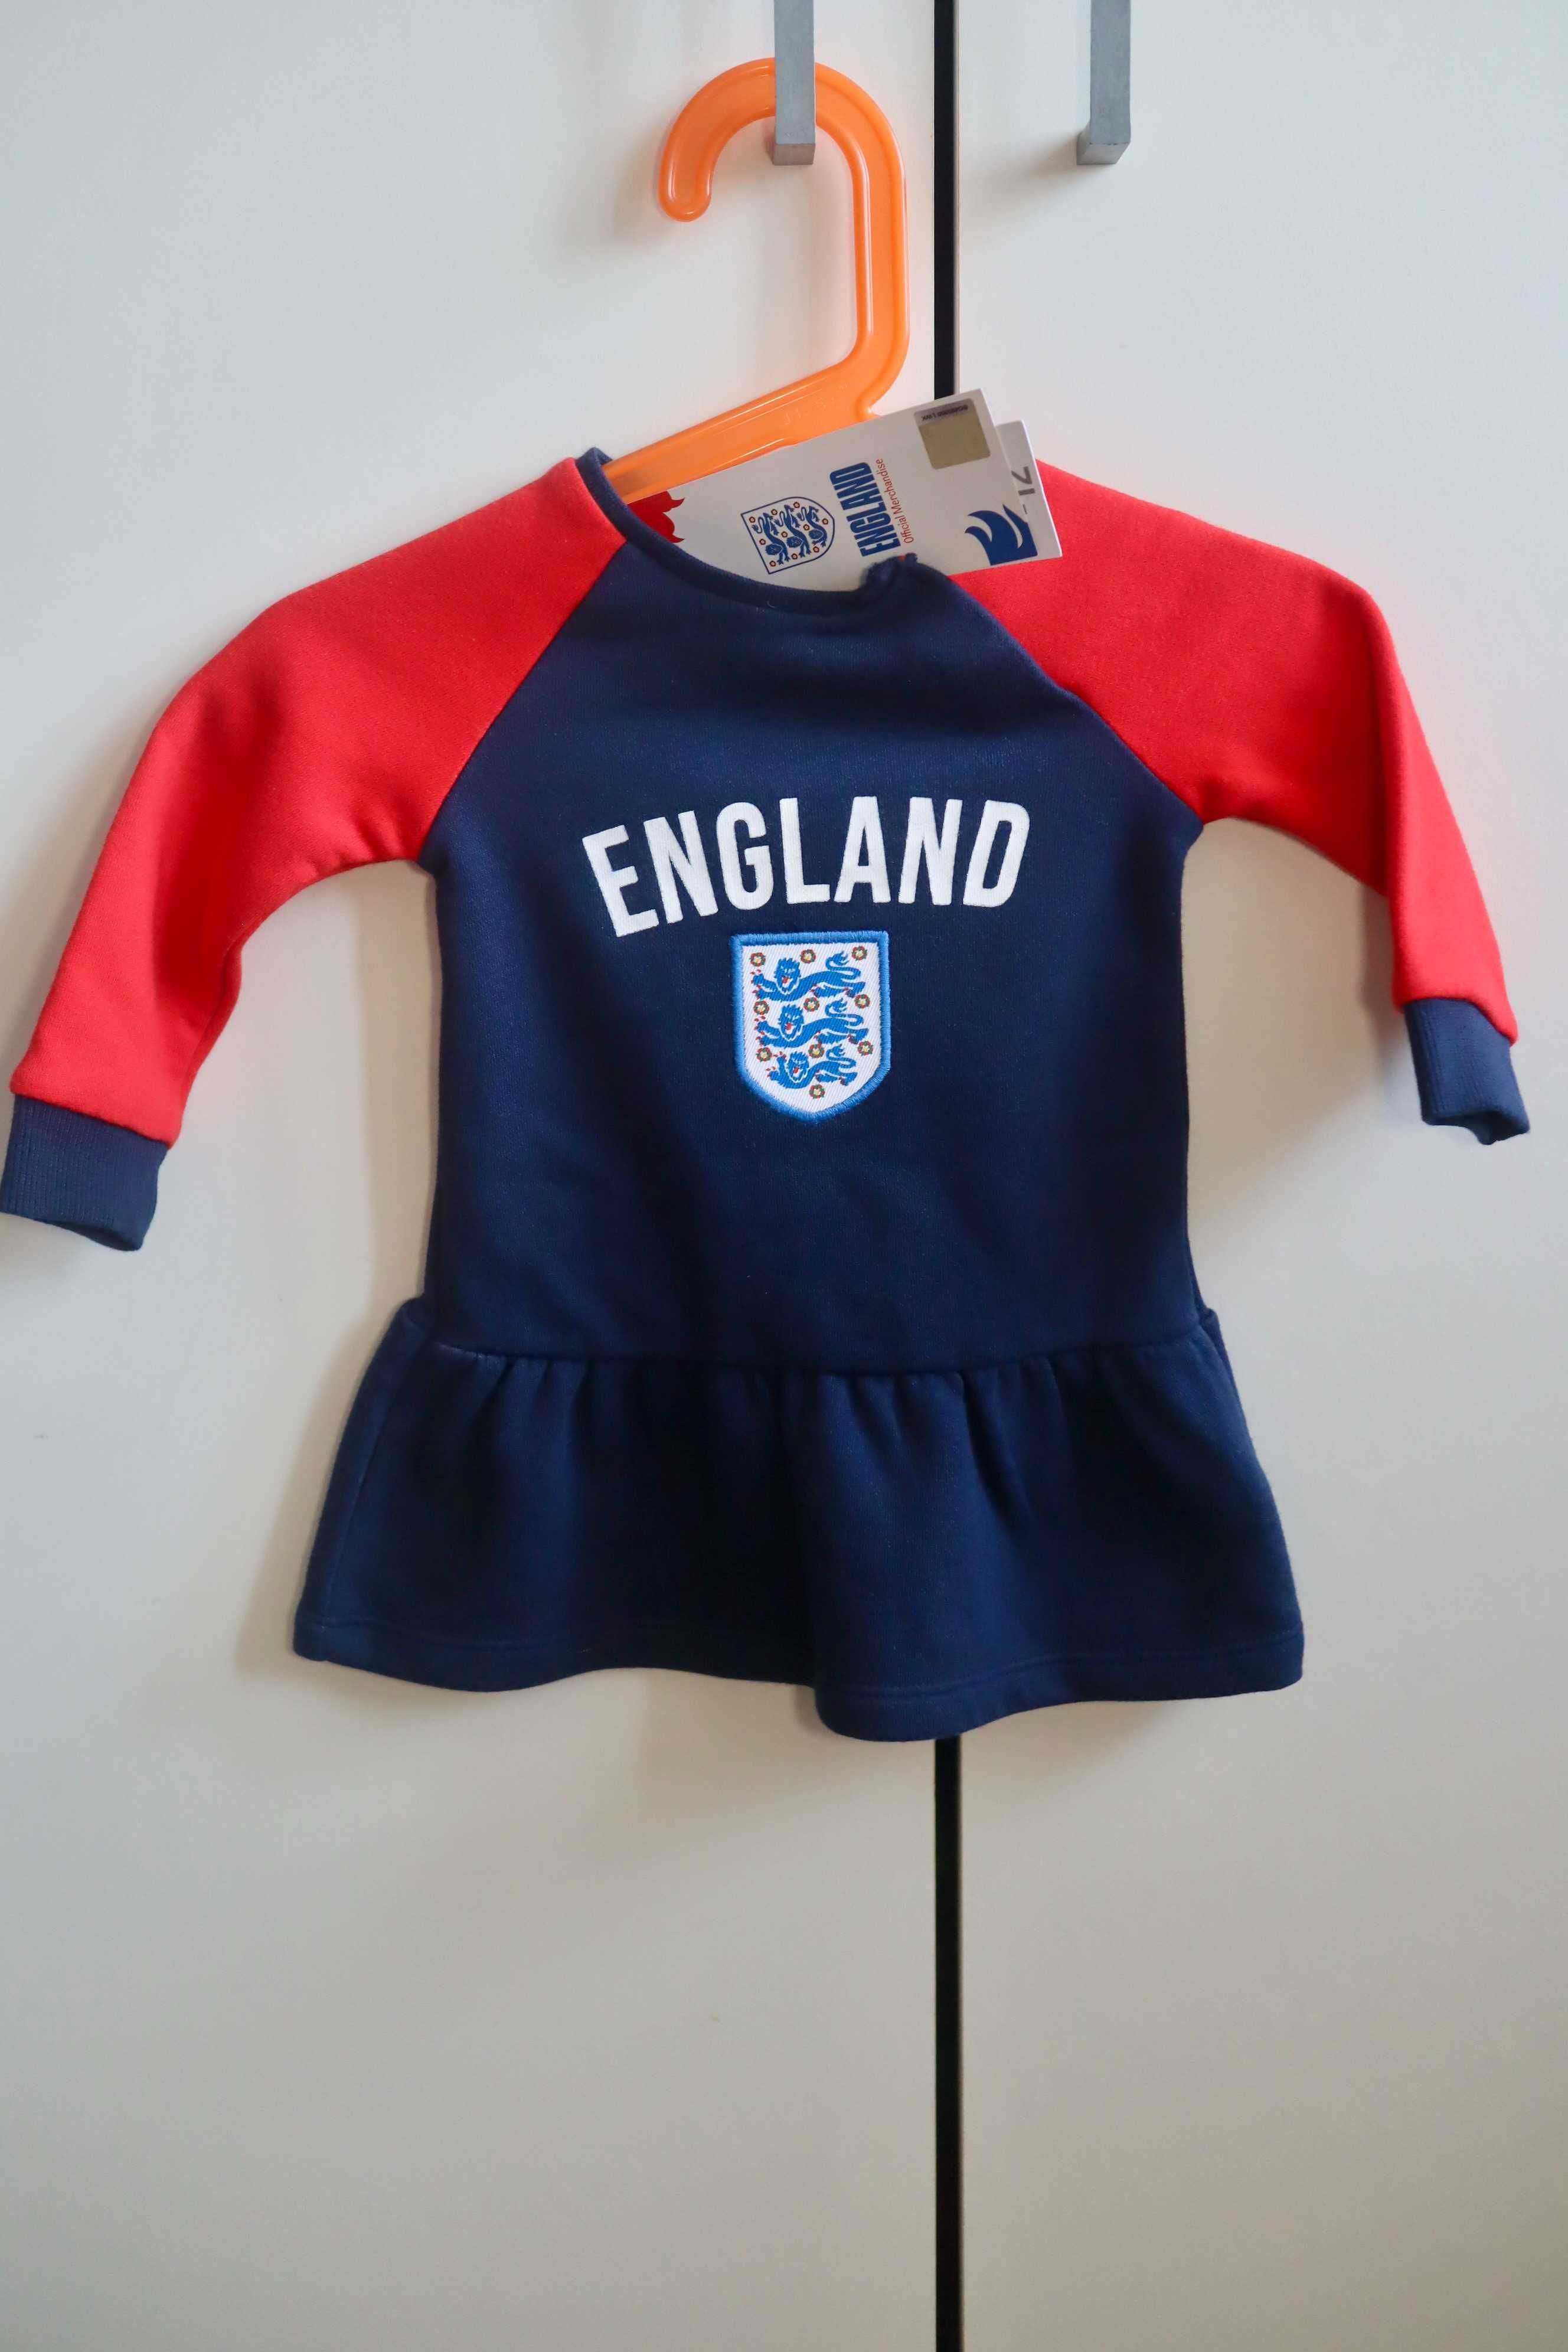 Sukienka niemowlęca Anglia England nowa z metką rozmiar 68